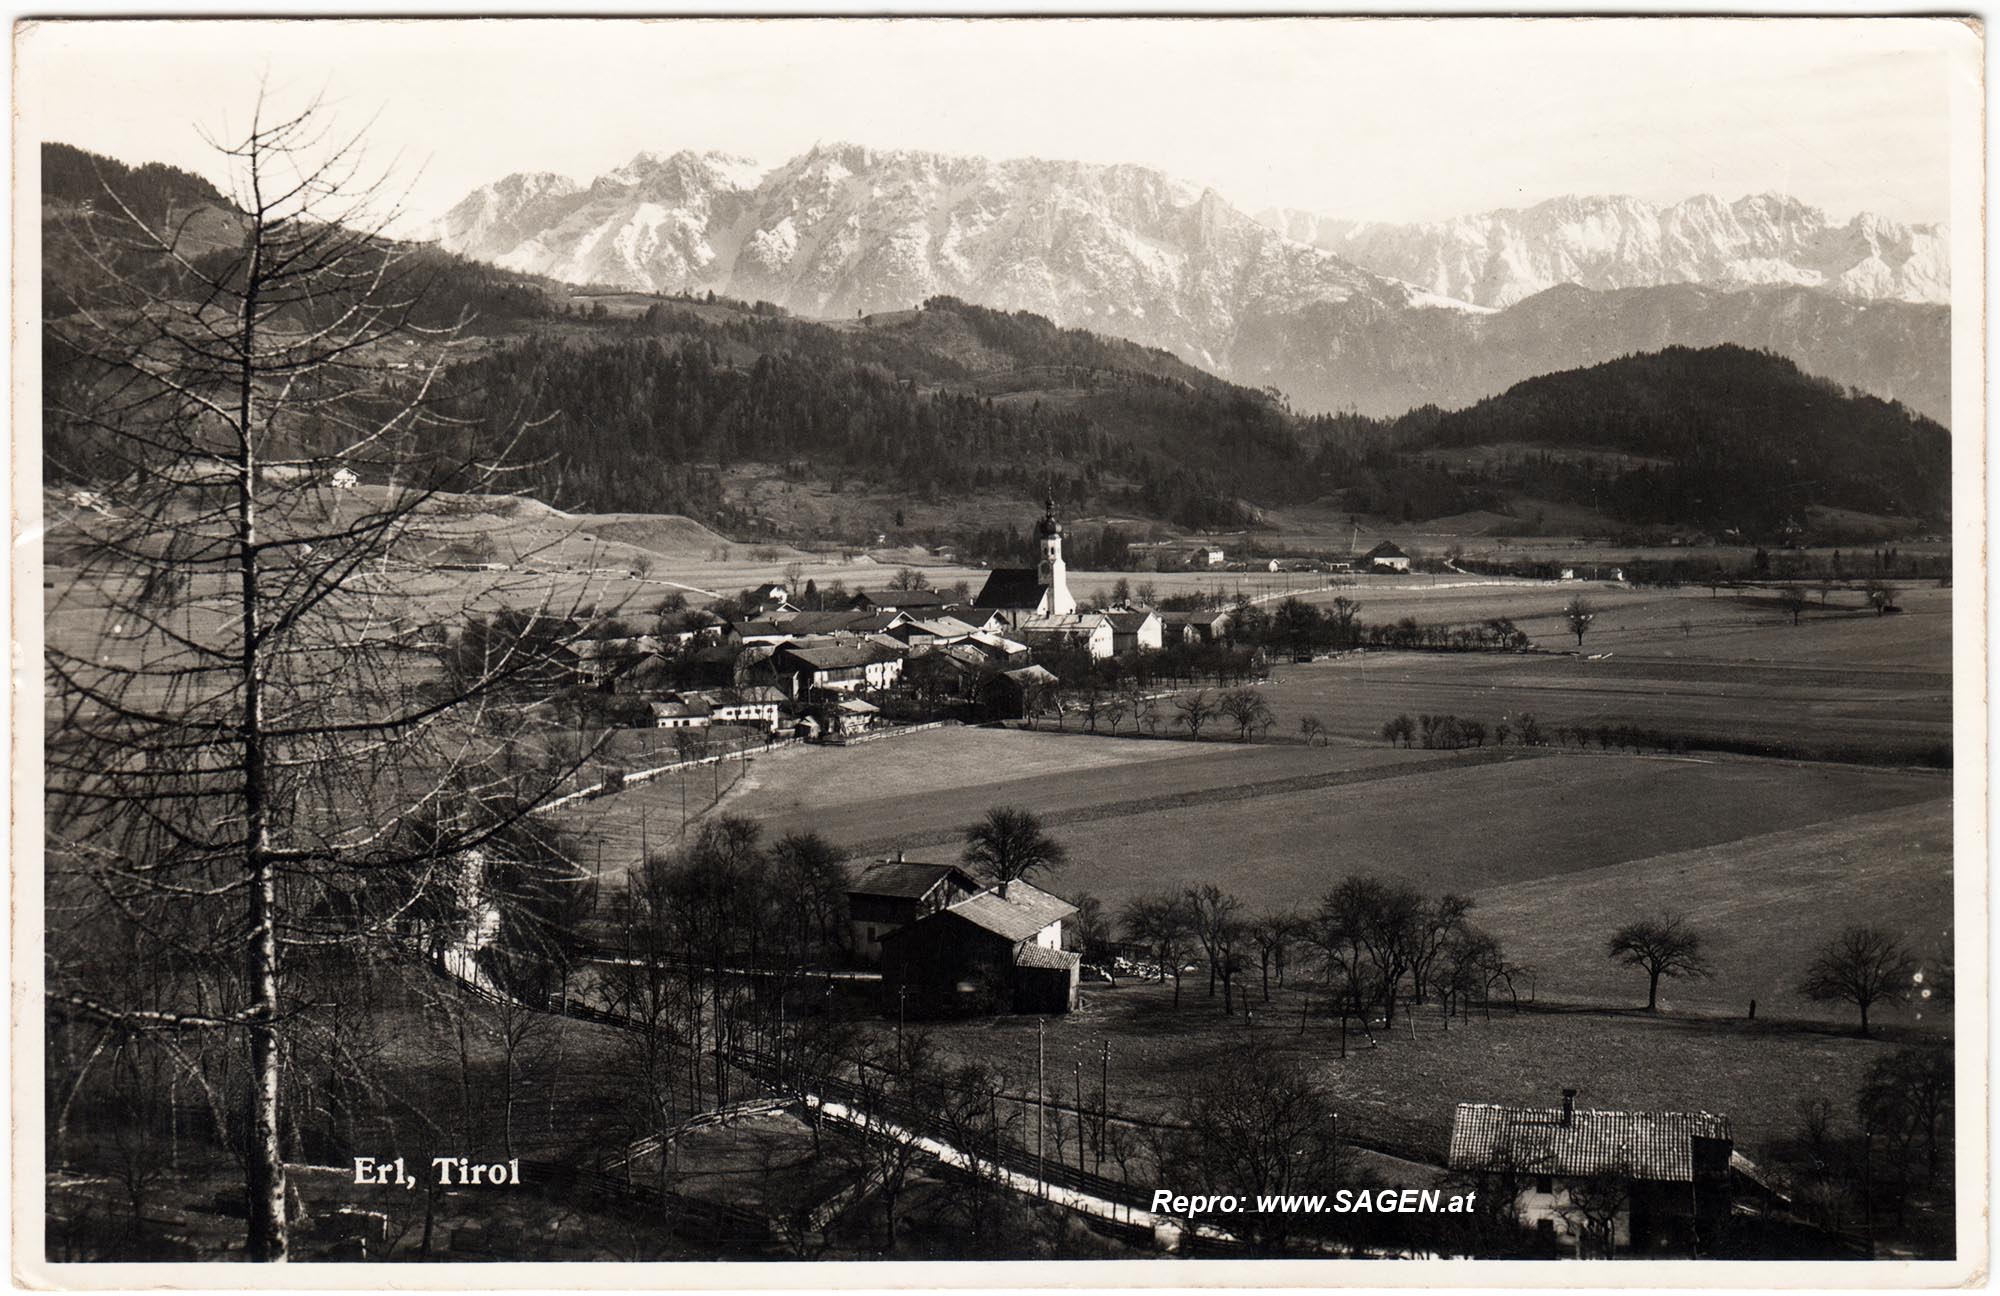 Erl, Tirol